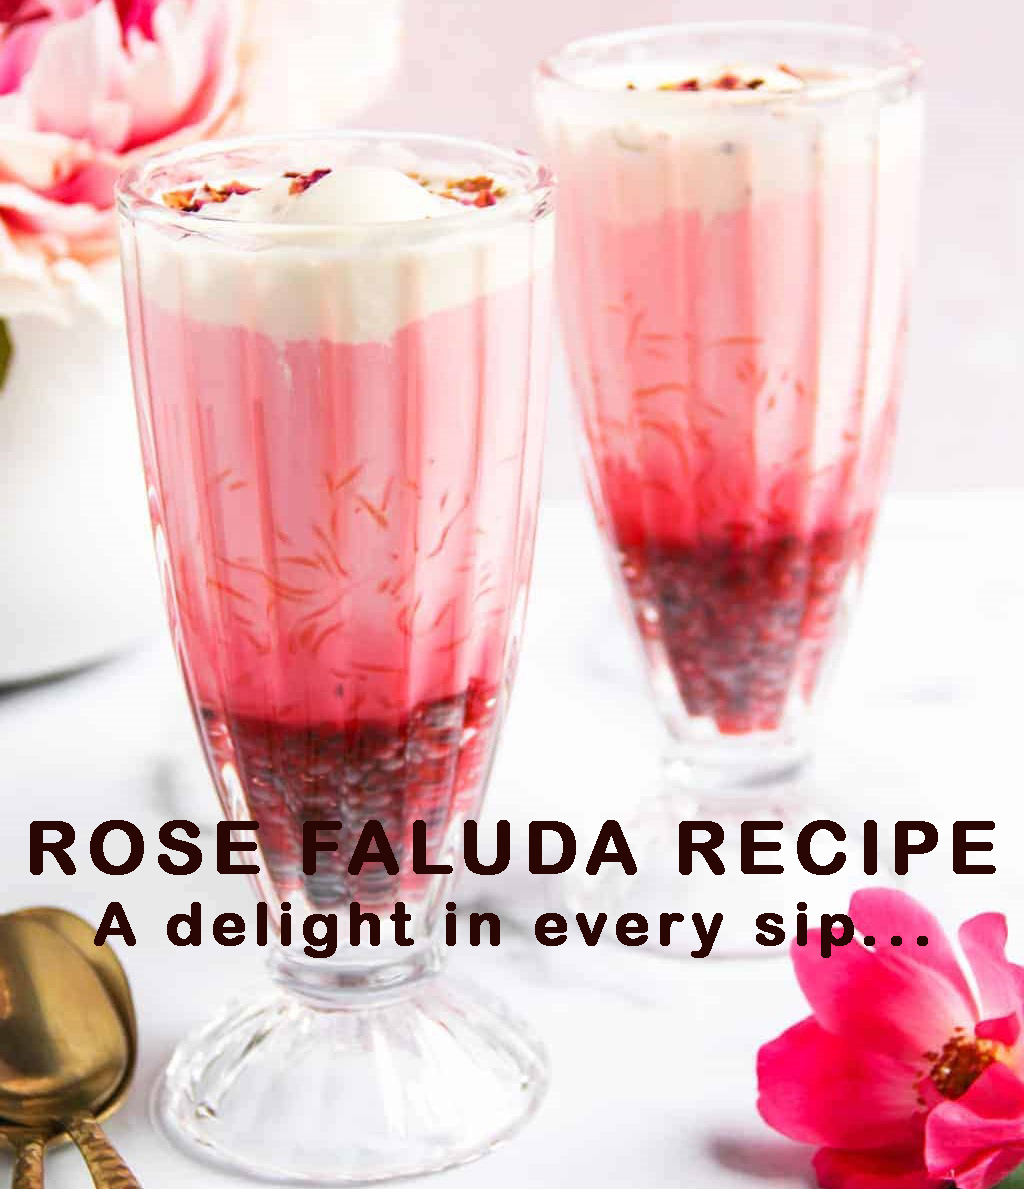 rose faluda recipe Indian dessert